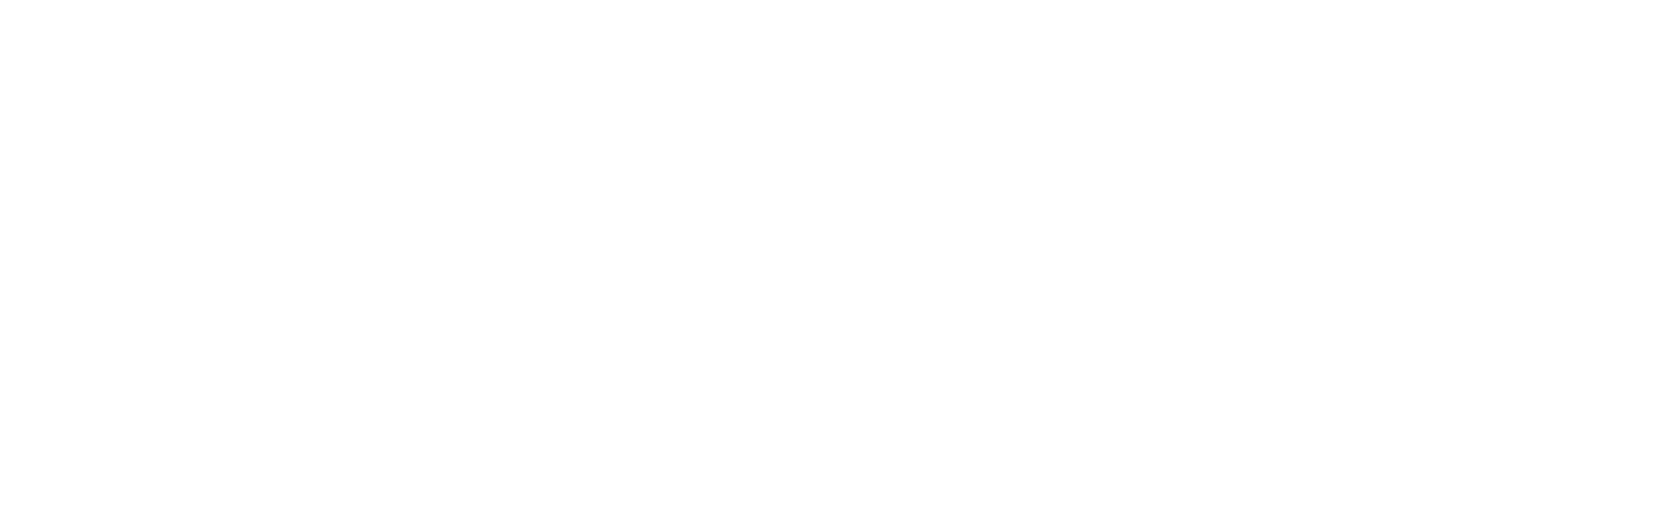 Aflac Logo - Aflac logo png 4 » PNG Image